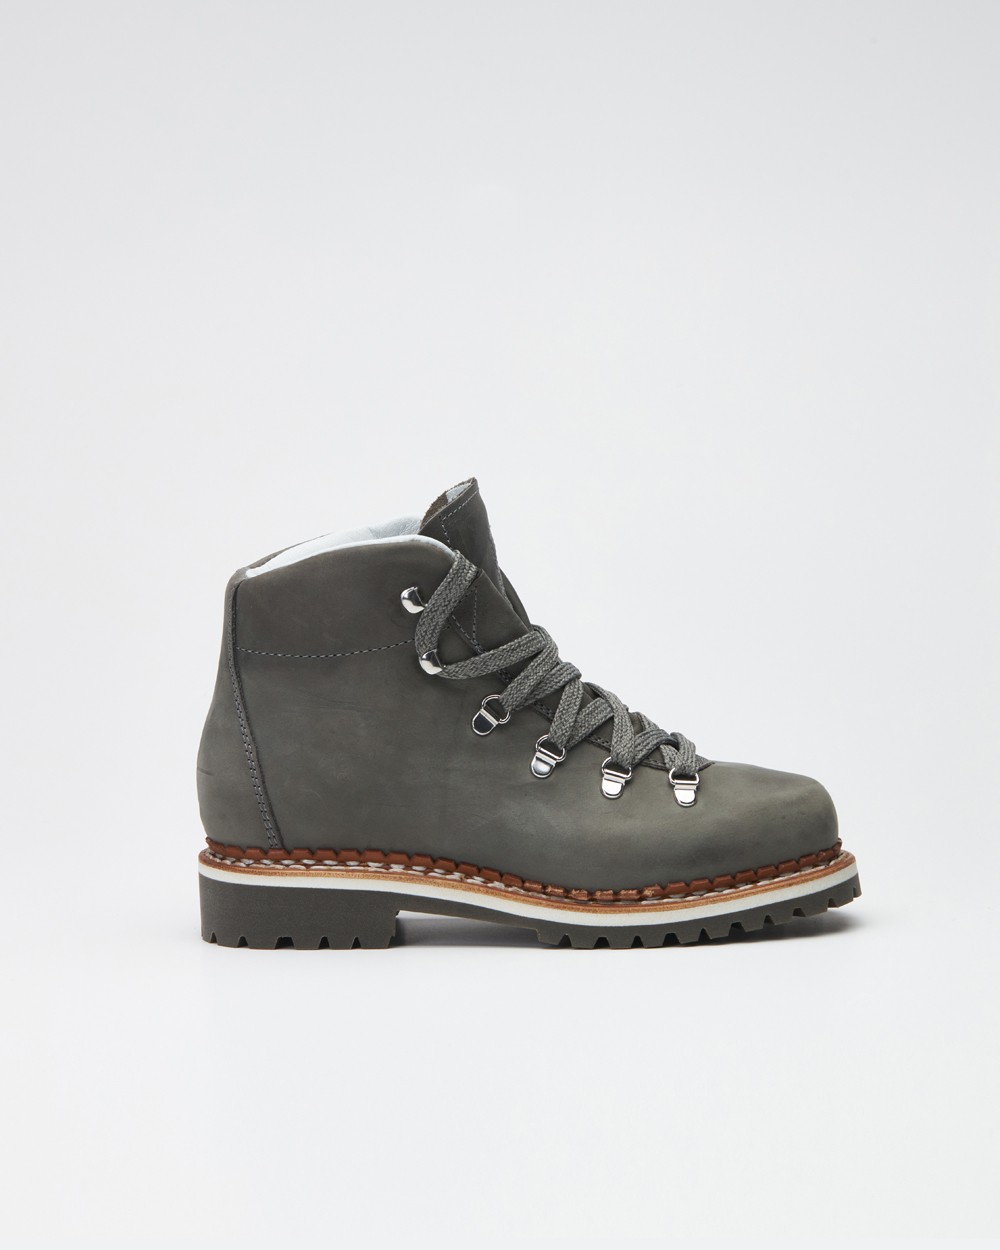 Fashion Boots Escoma Grey | Ventesima Strada